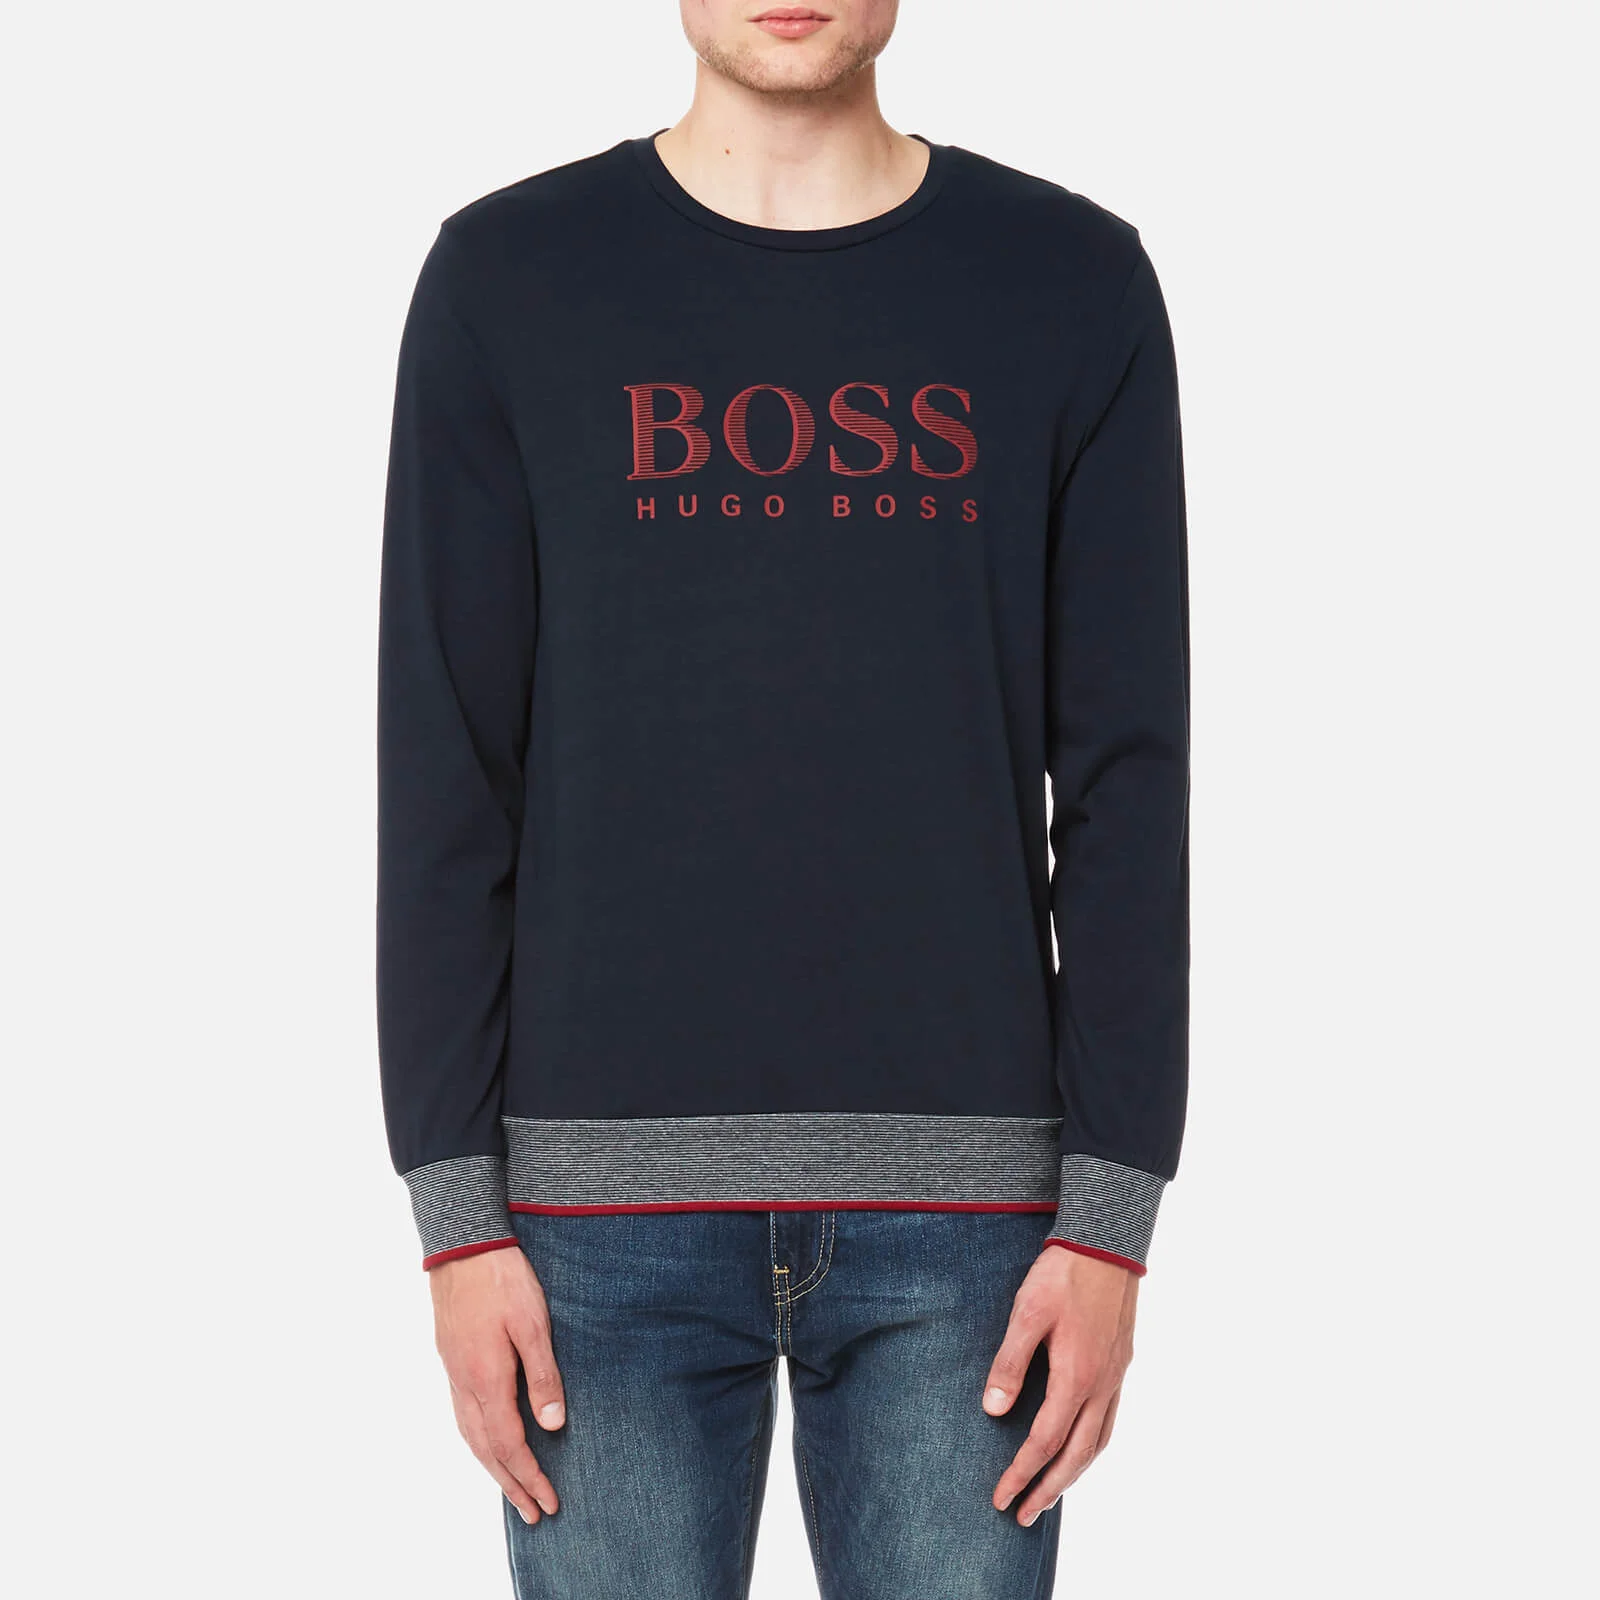 BOSS Hugo Boss Men's Authentic Round Neck Sweatshirt - Dark Blue Image 1